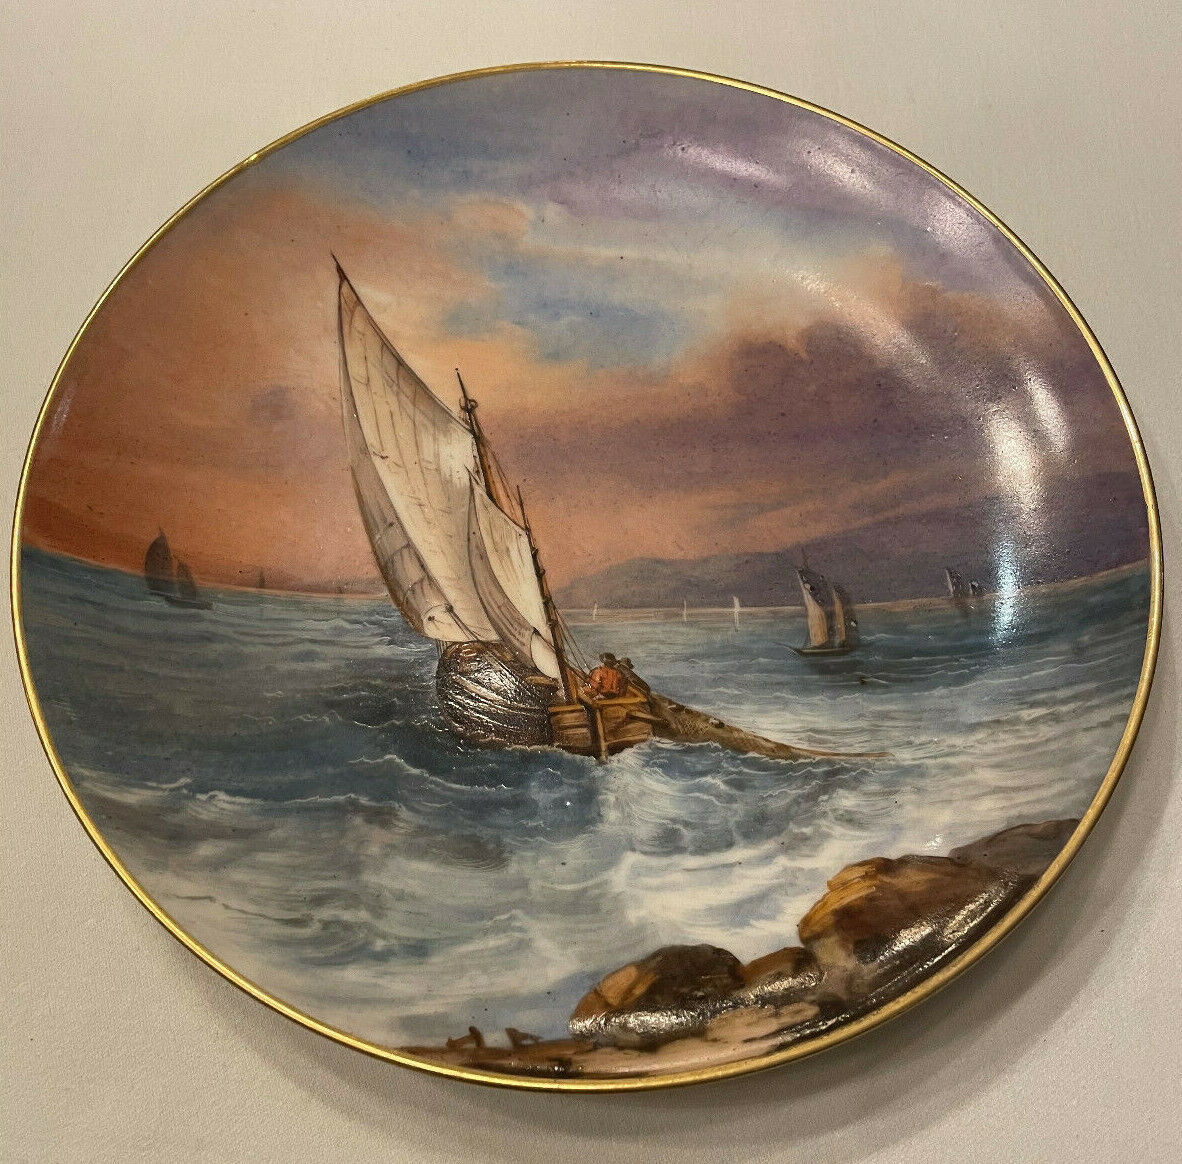 Decorative Antique Plate with Sailboat Scene 